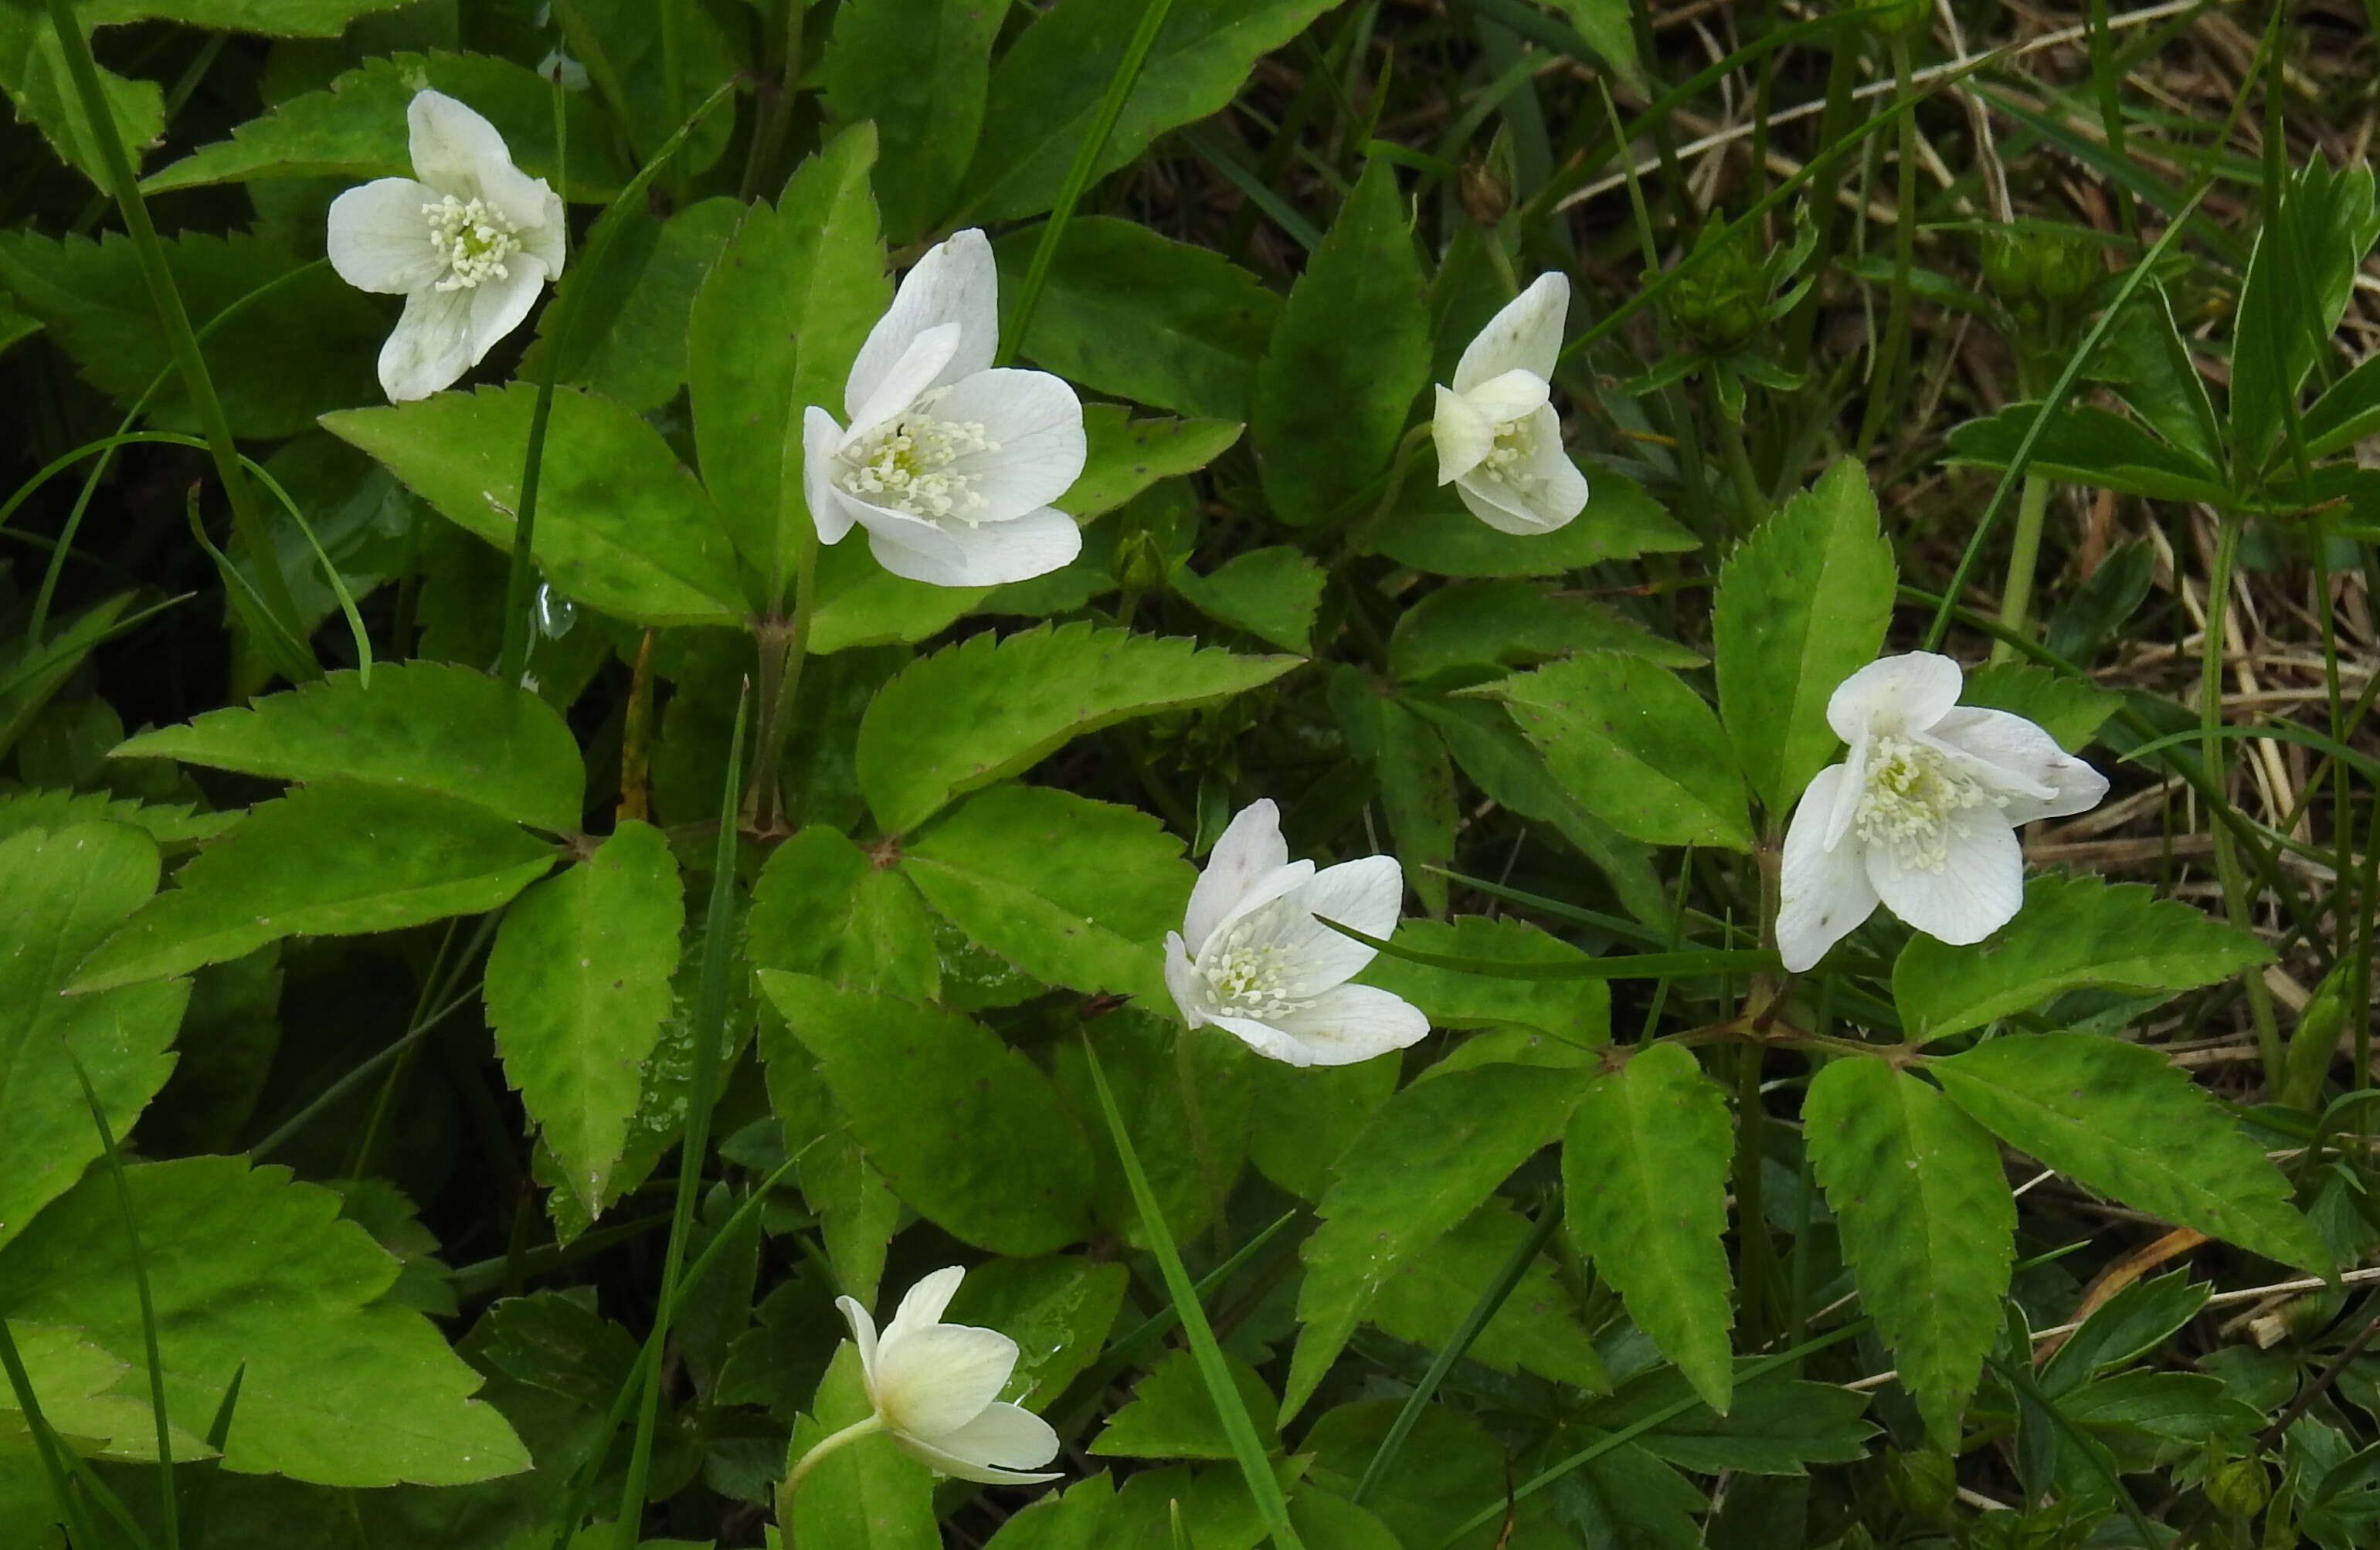 Image of Anemone trifolia L.